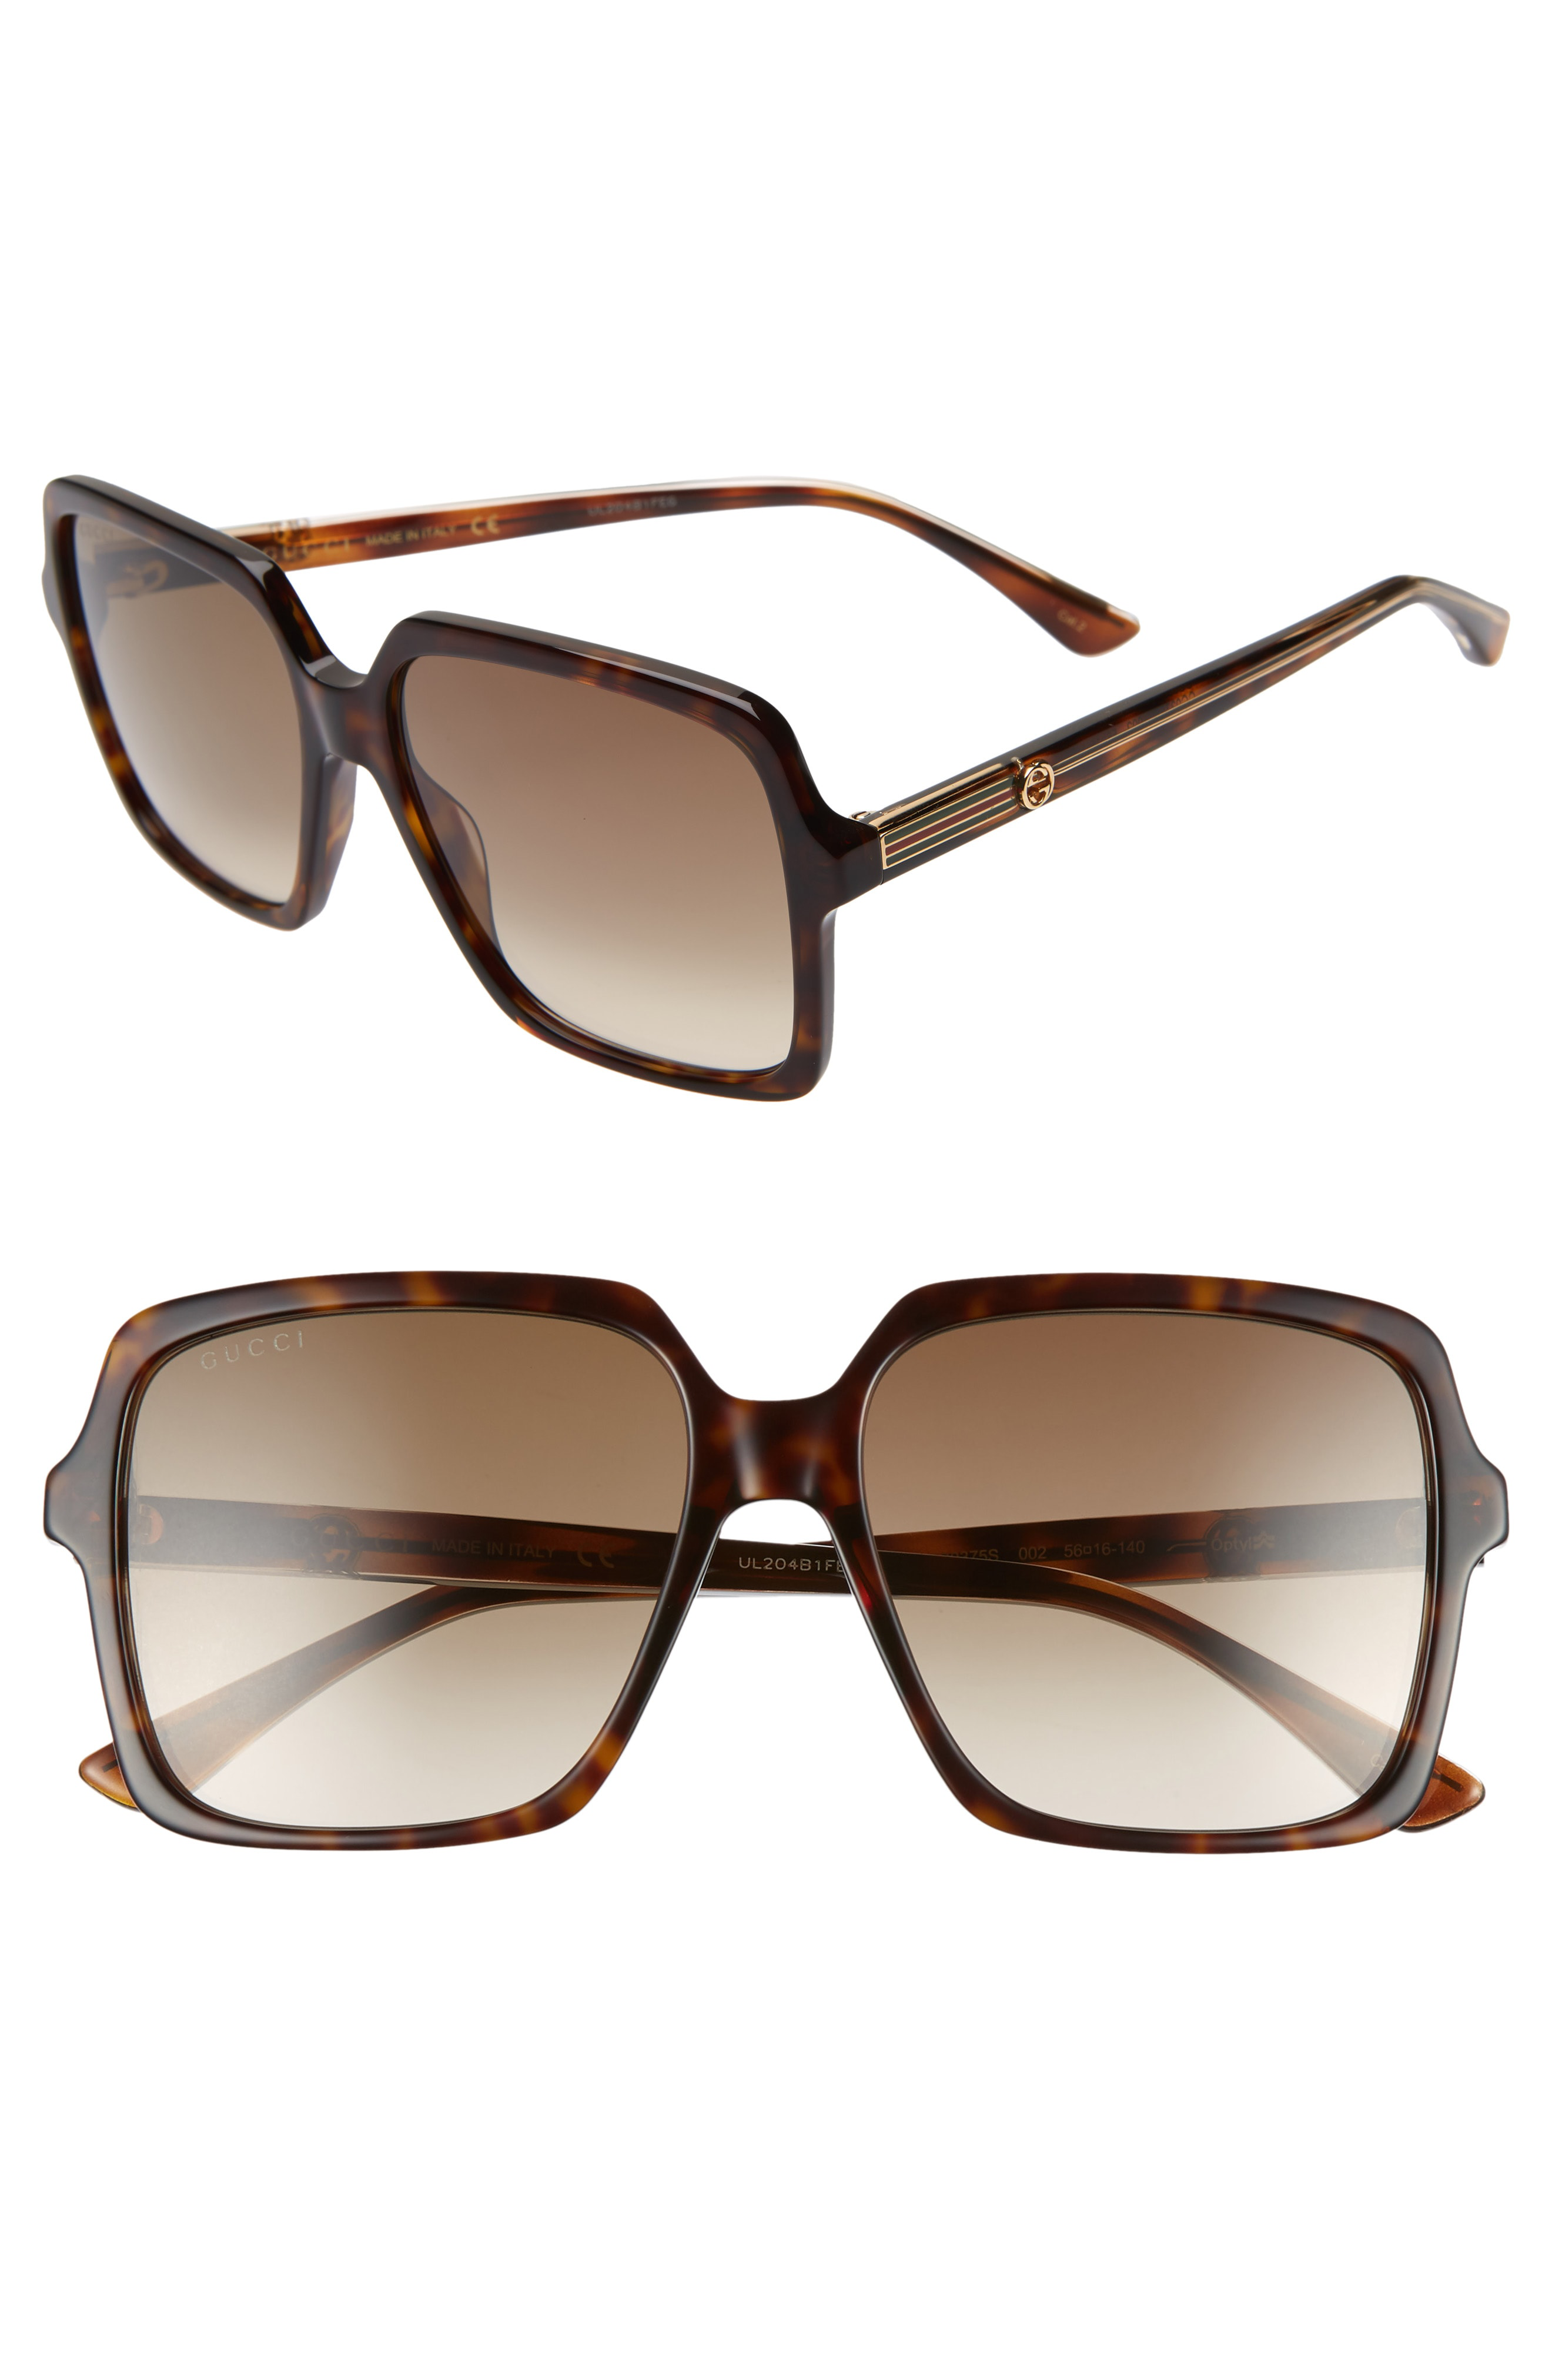 Gucci 56mm Square Sunglasses - Dk Havana/cry/brown Gradient | ModeSens